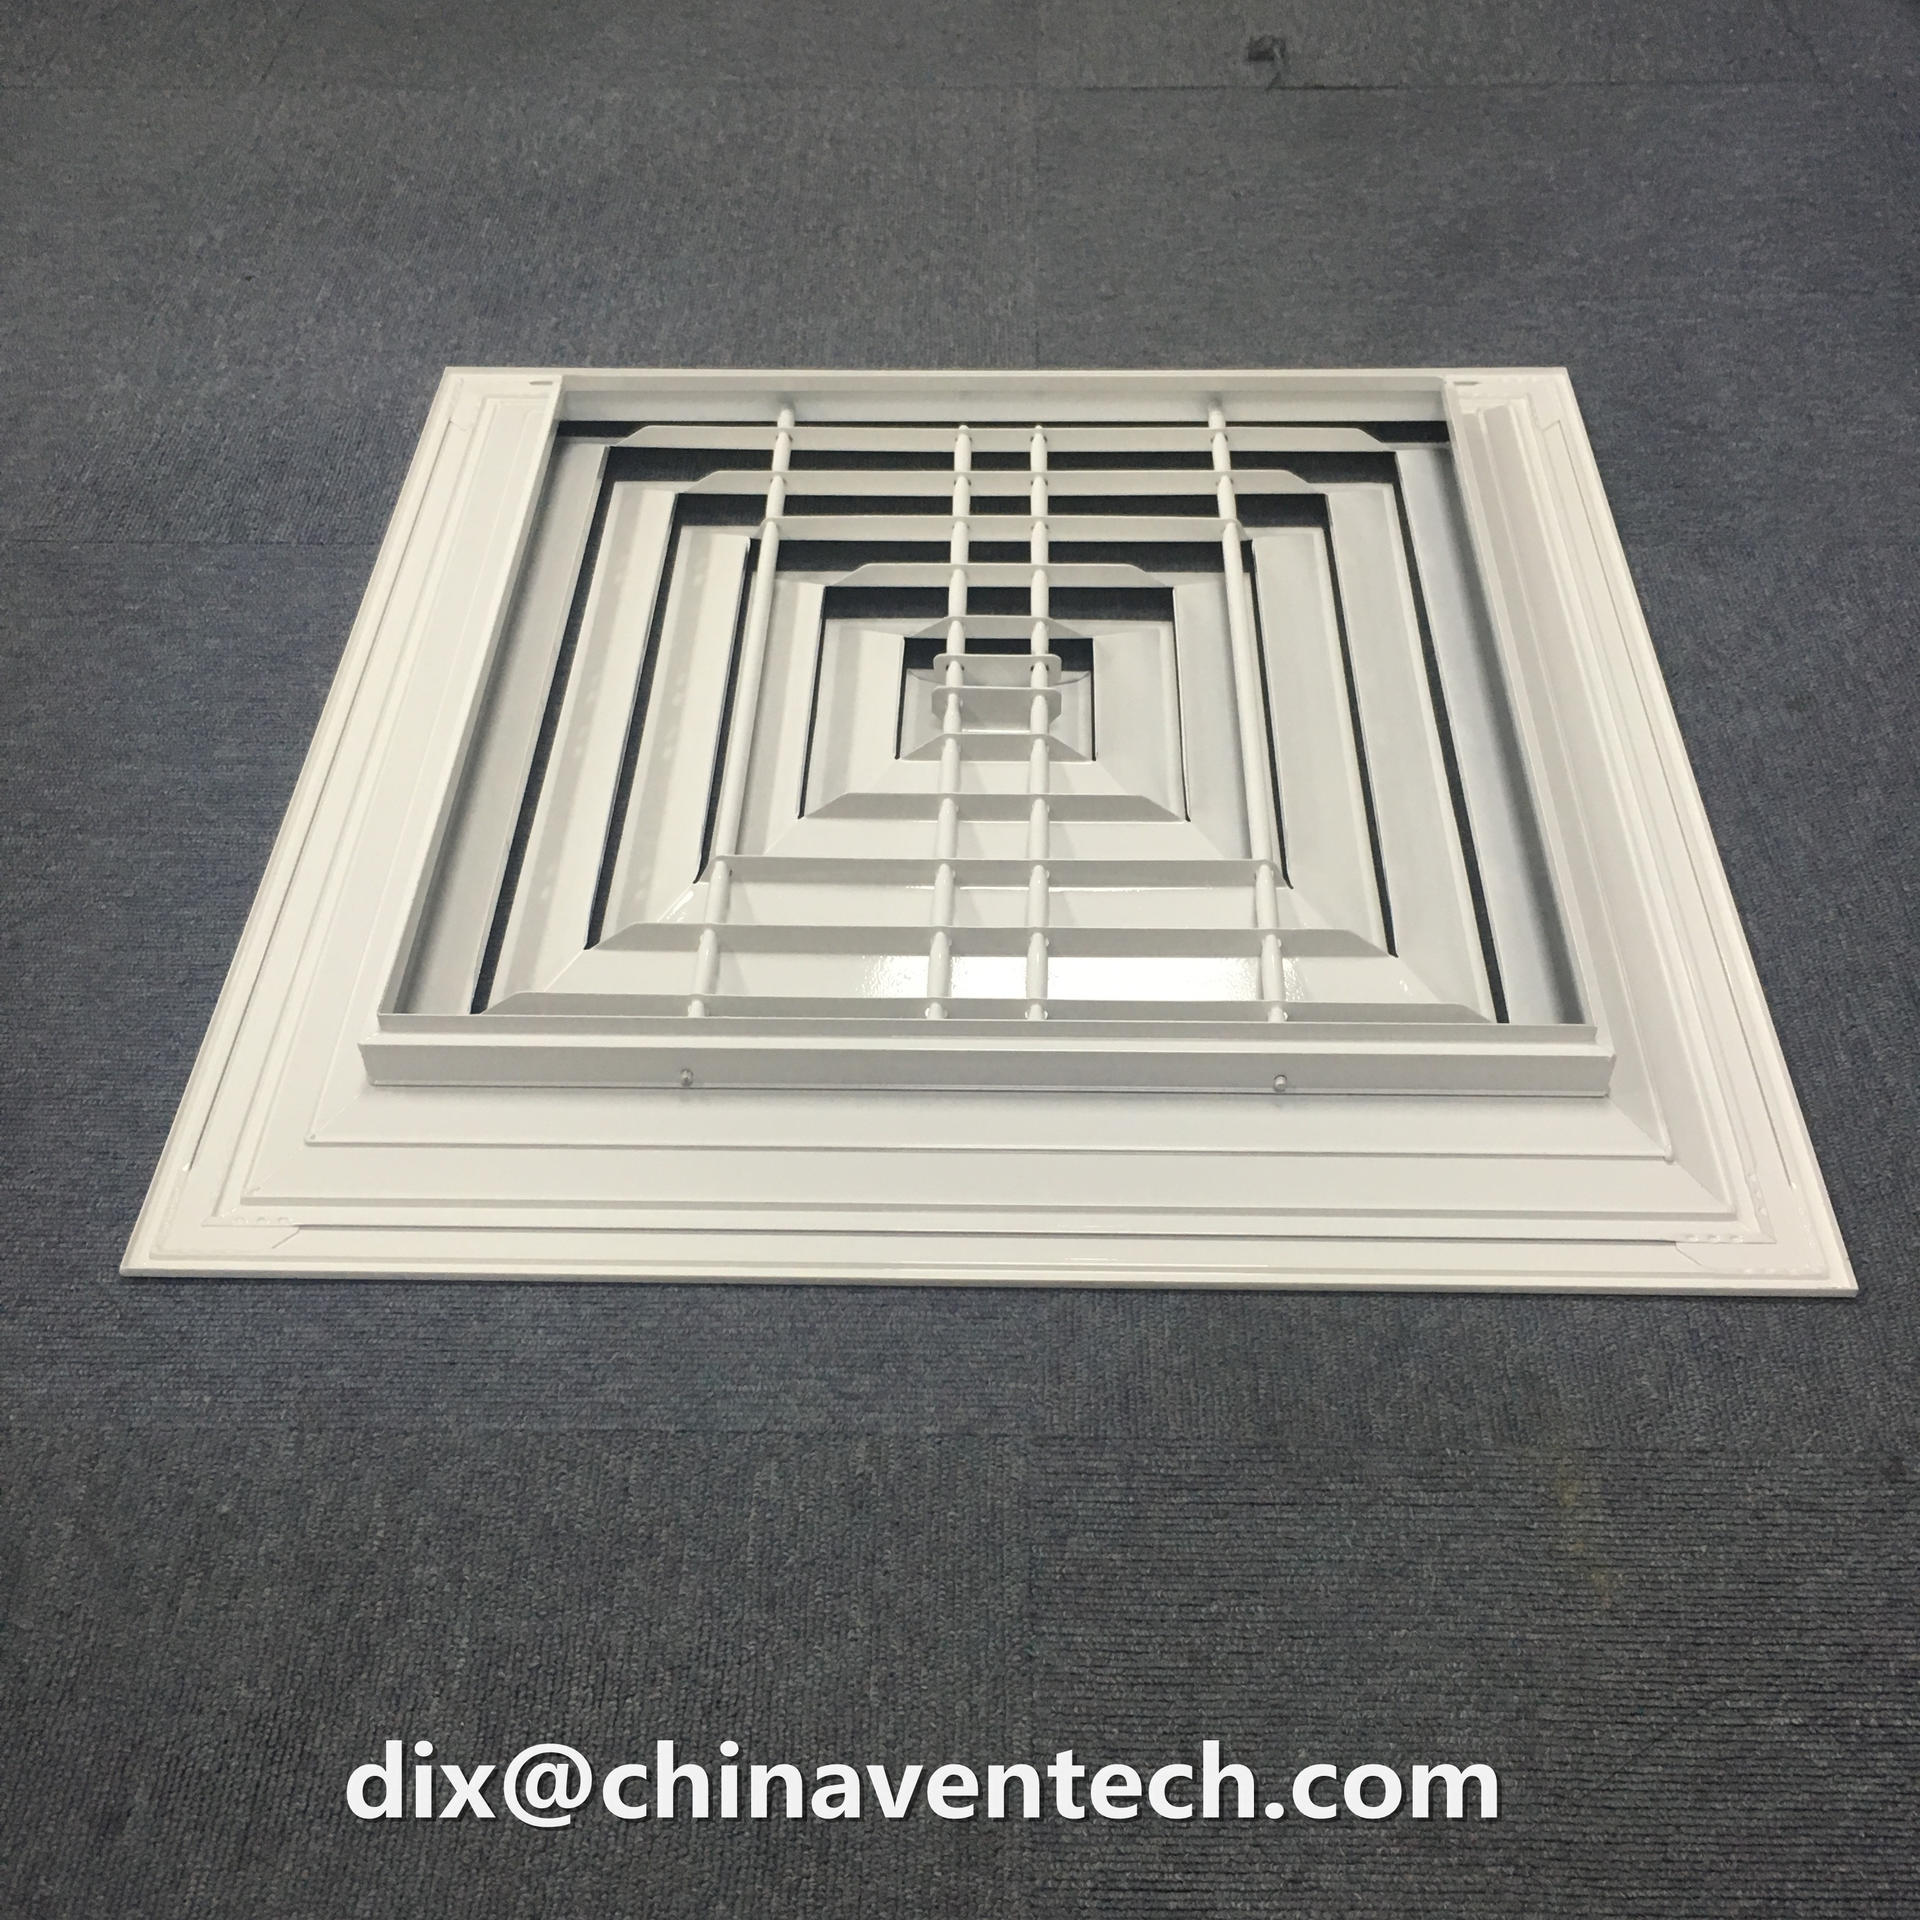 HVAC return air ventilation ceiling 4 way square diffuser